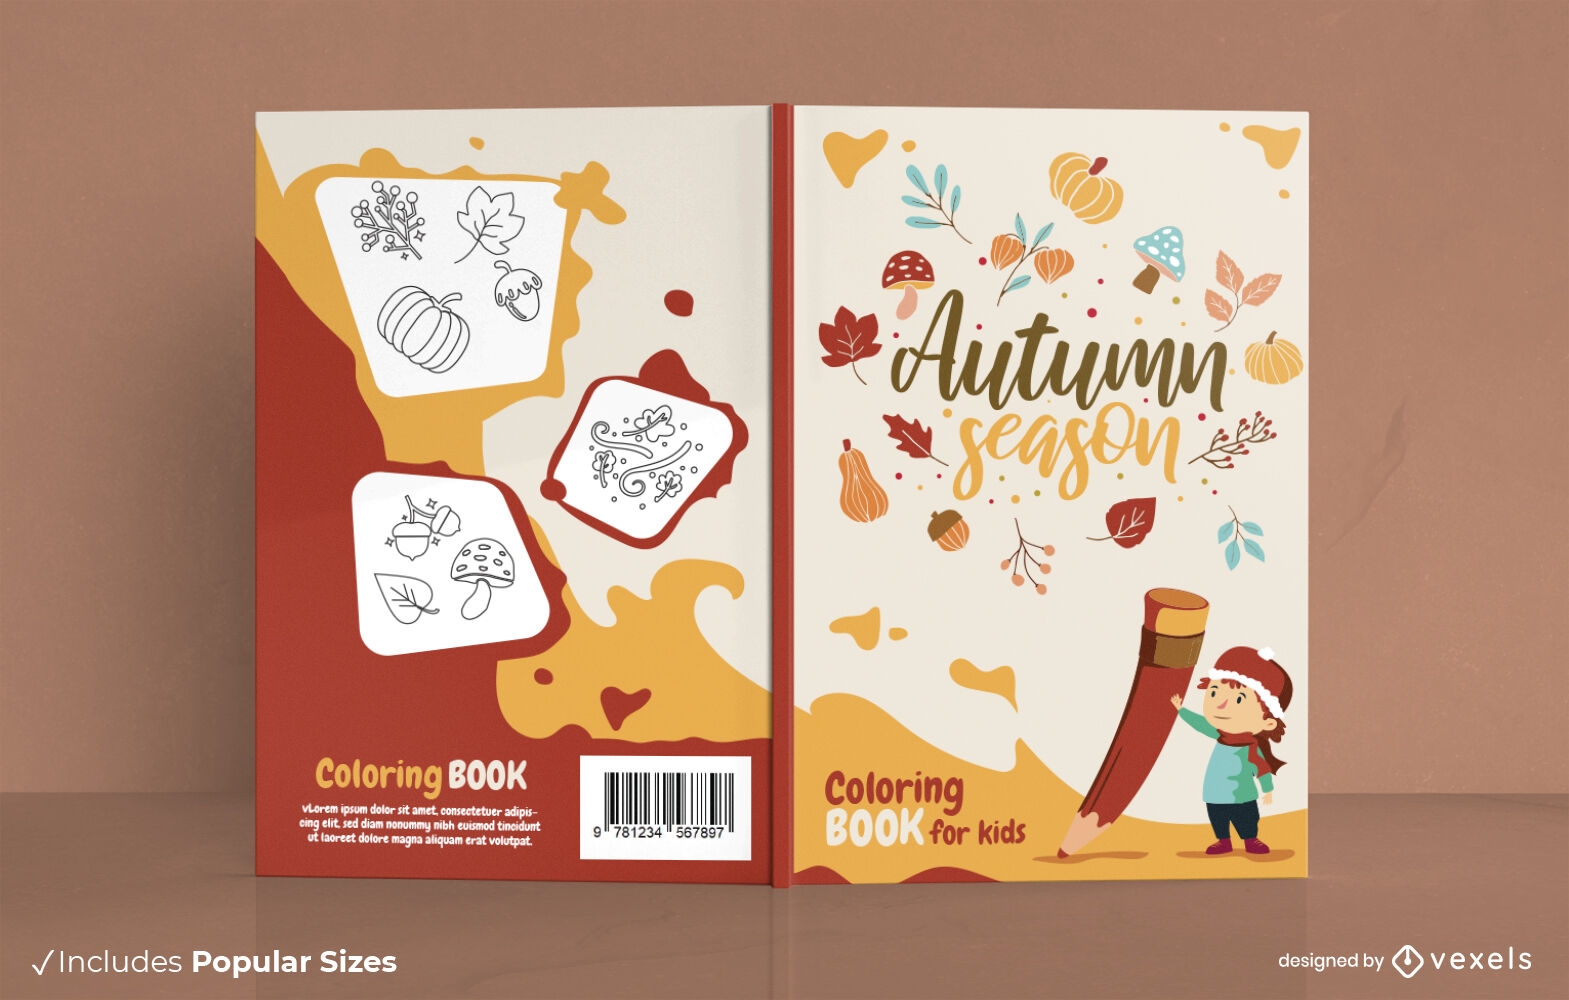 Autumn season nature book cover design